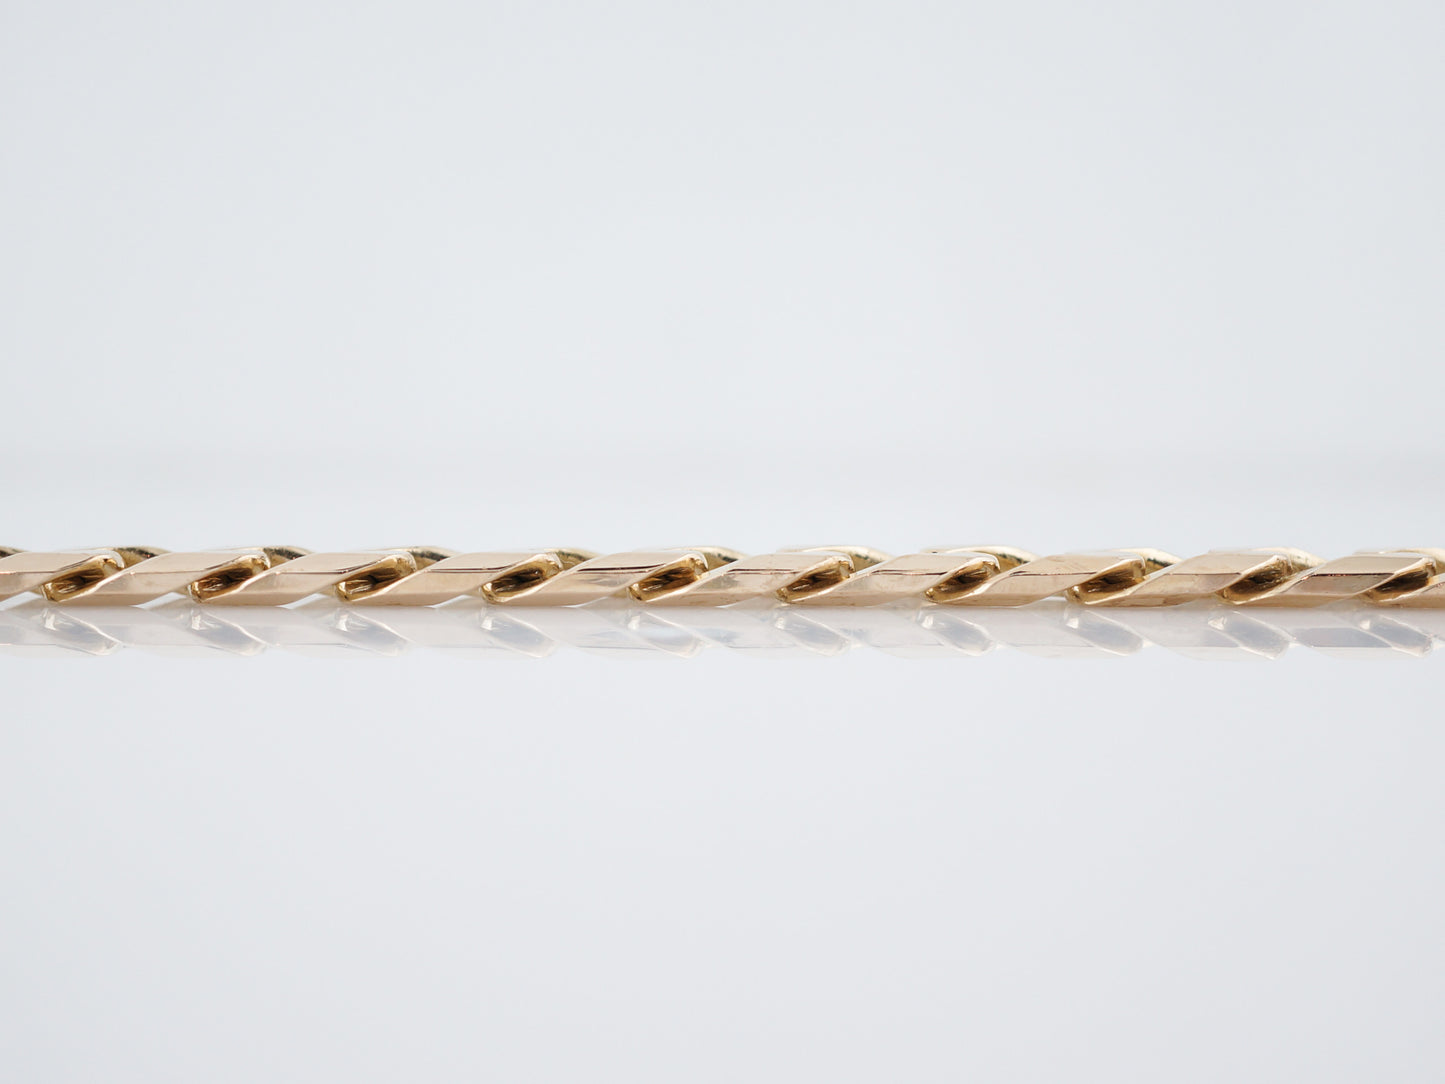 Bracelet Modern Chain Link in 14K Yellow Gold